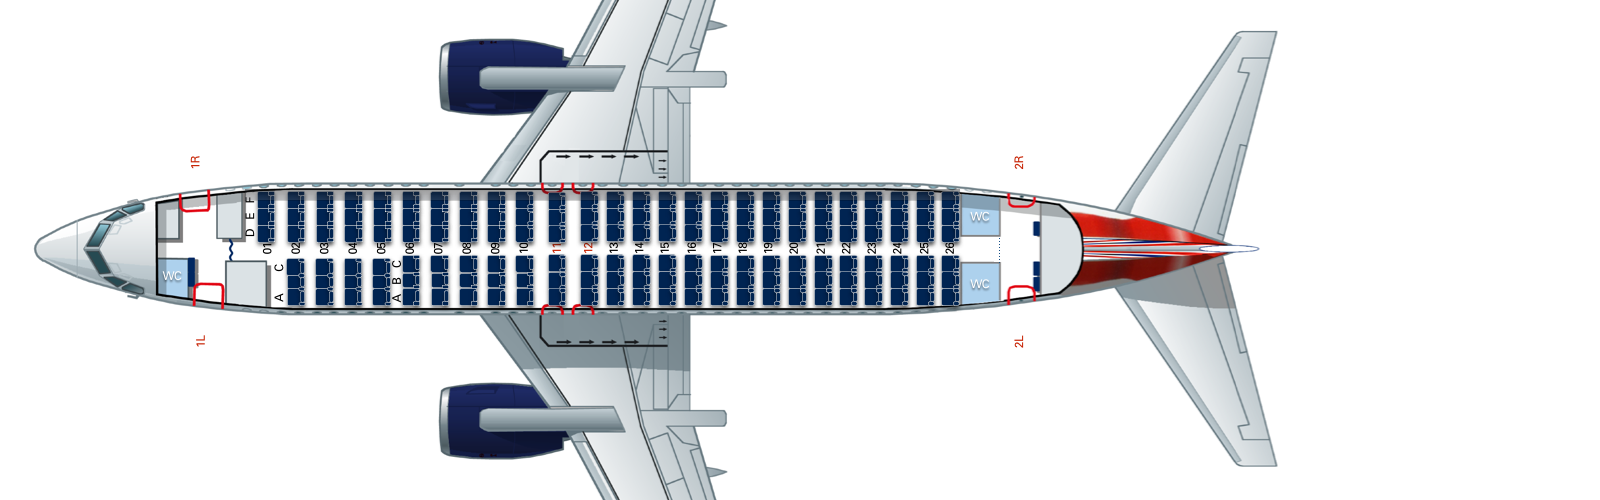 Seating Guide: Boeing 737-436 - FlyerTalk Forums